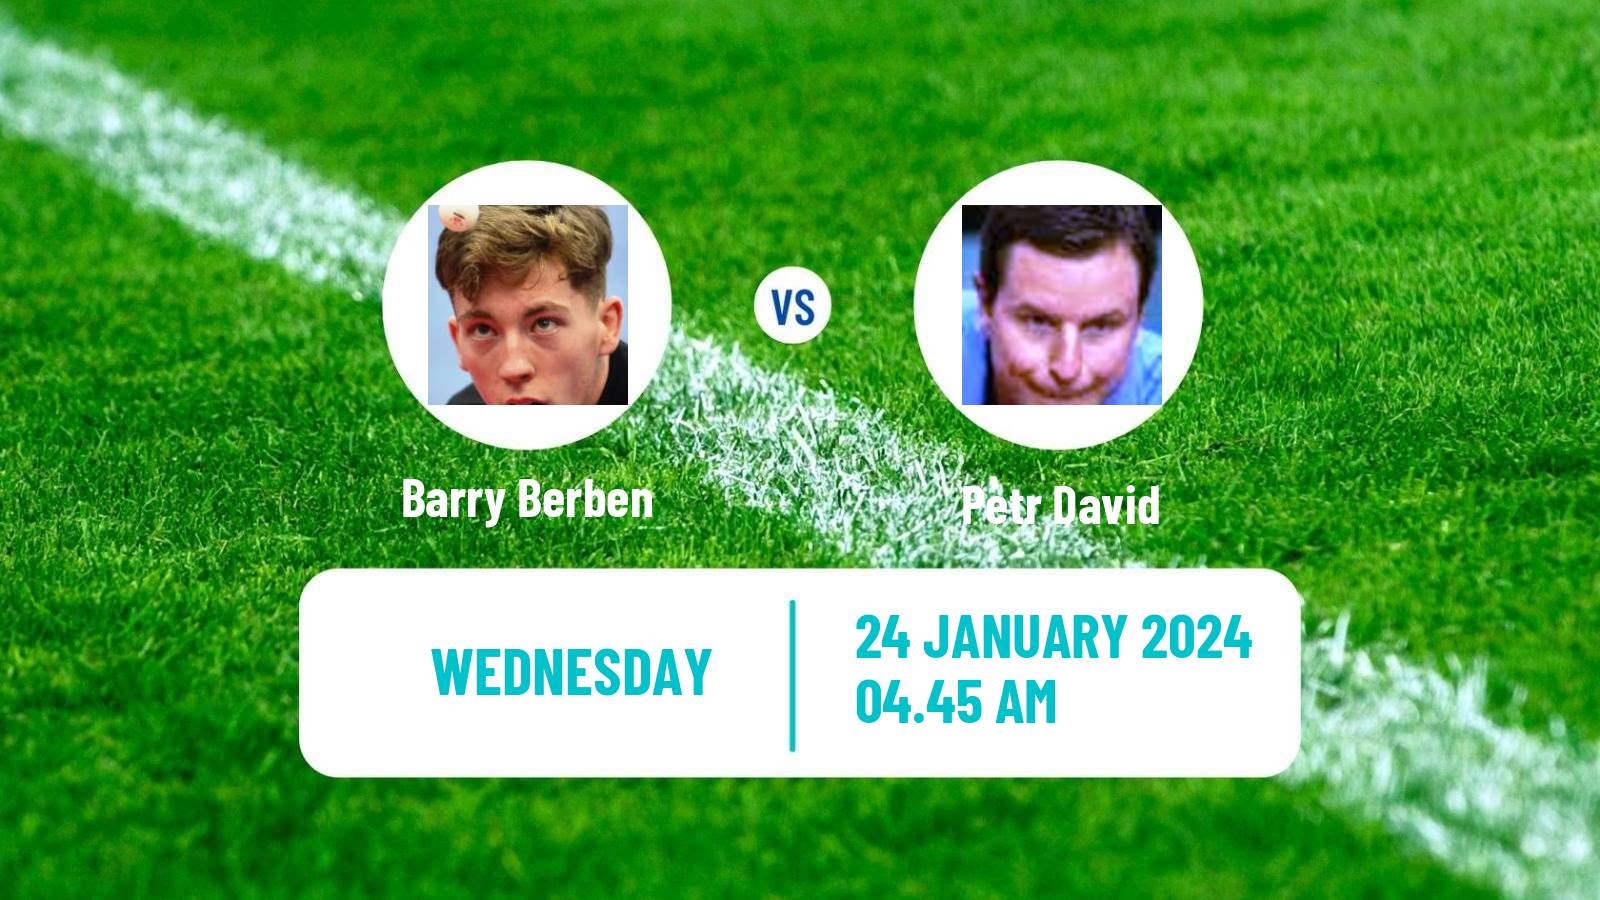 Table tennis Tt Star Series Men Barry Berben - Petr David